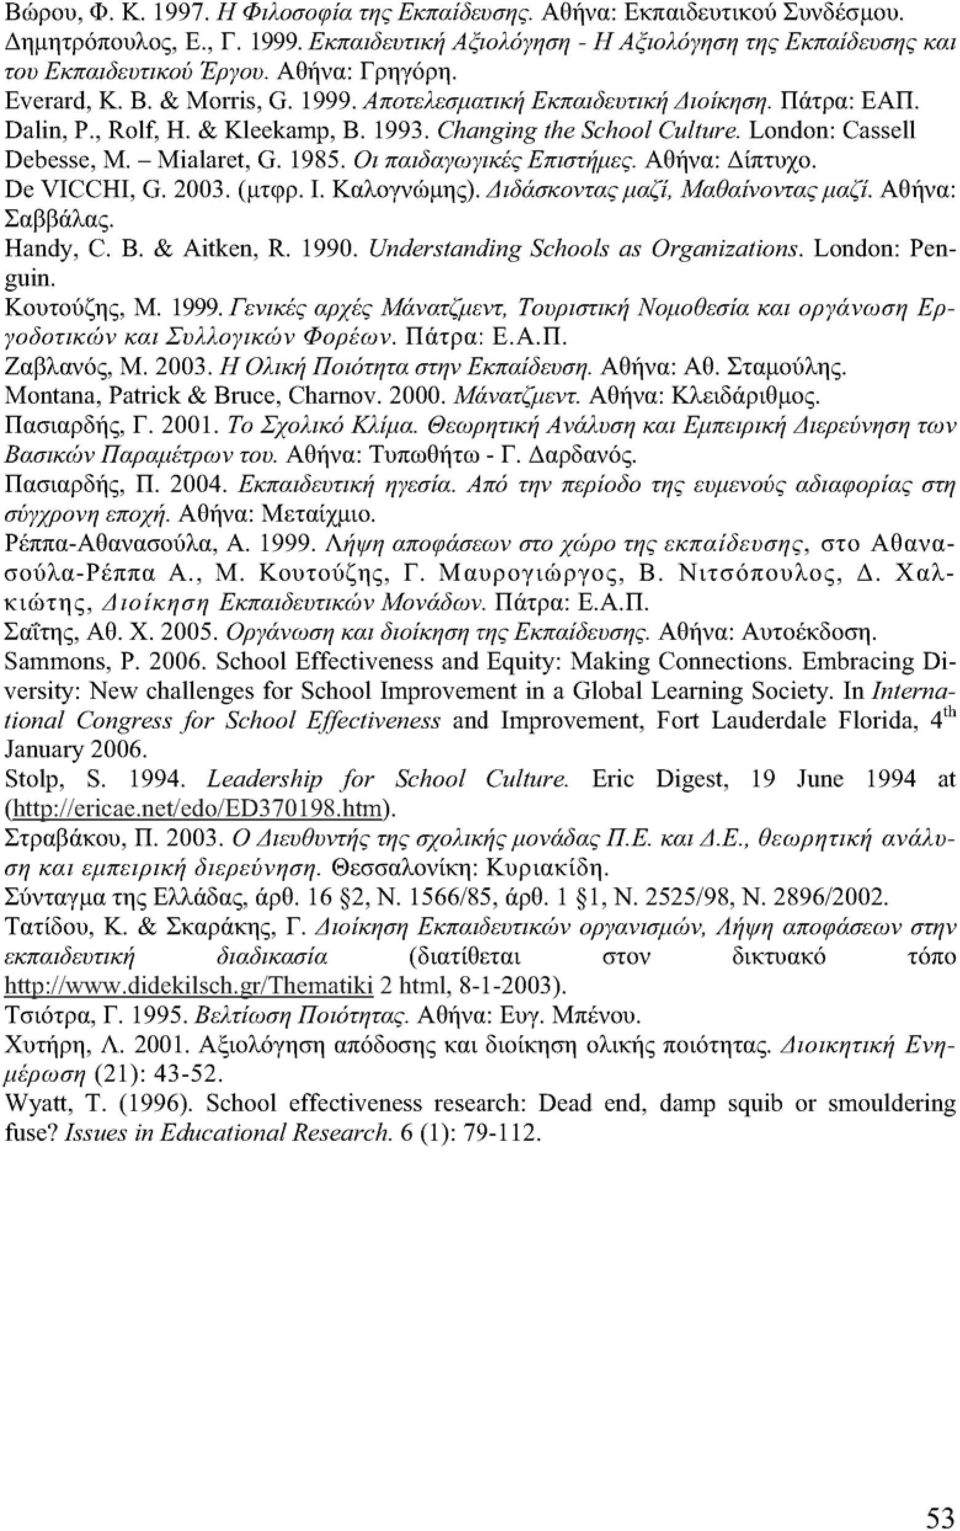 - Mialaret, G. 1985. Οι παιδαγωγικές Επιστήμες. Αθήνα: Δίπτυχο. De VICCHI, G. 2003. (μτφρ. Ι. Καλόγνωμης). Διδάσκοντας μαζί, Μαθαίνοντας μαζί. Αθήνα: Σαββάλας. Handy, C. Β. & Aitken, R. 1990.